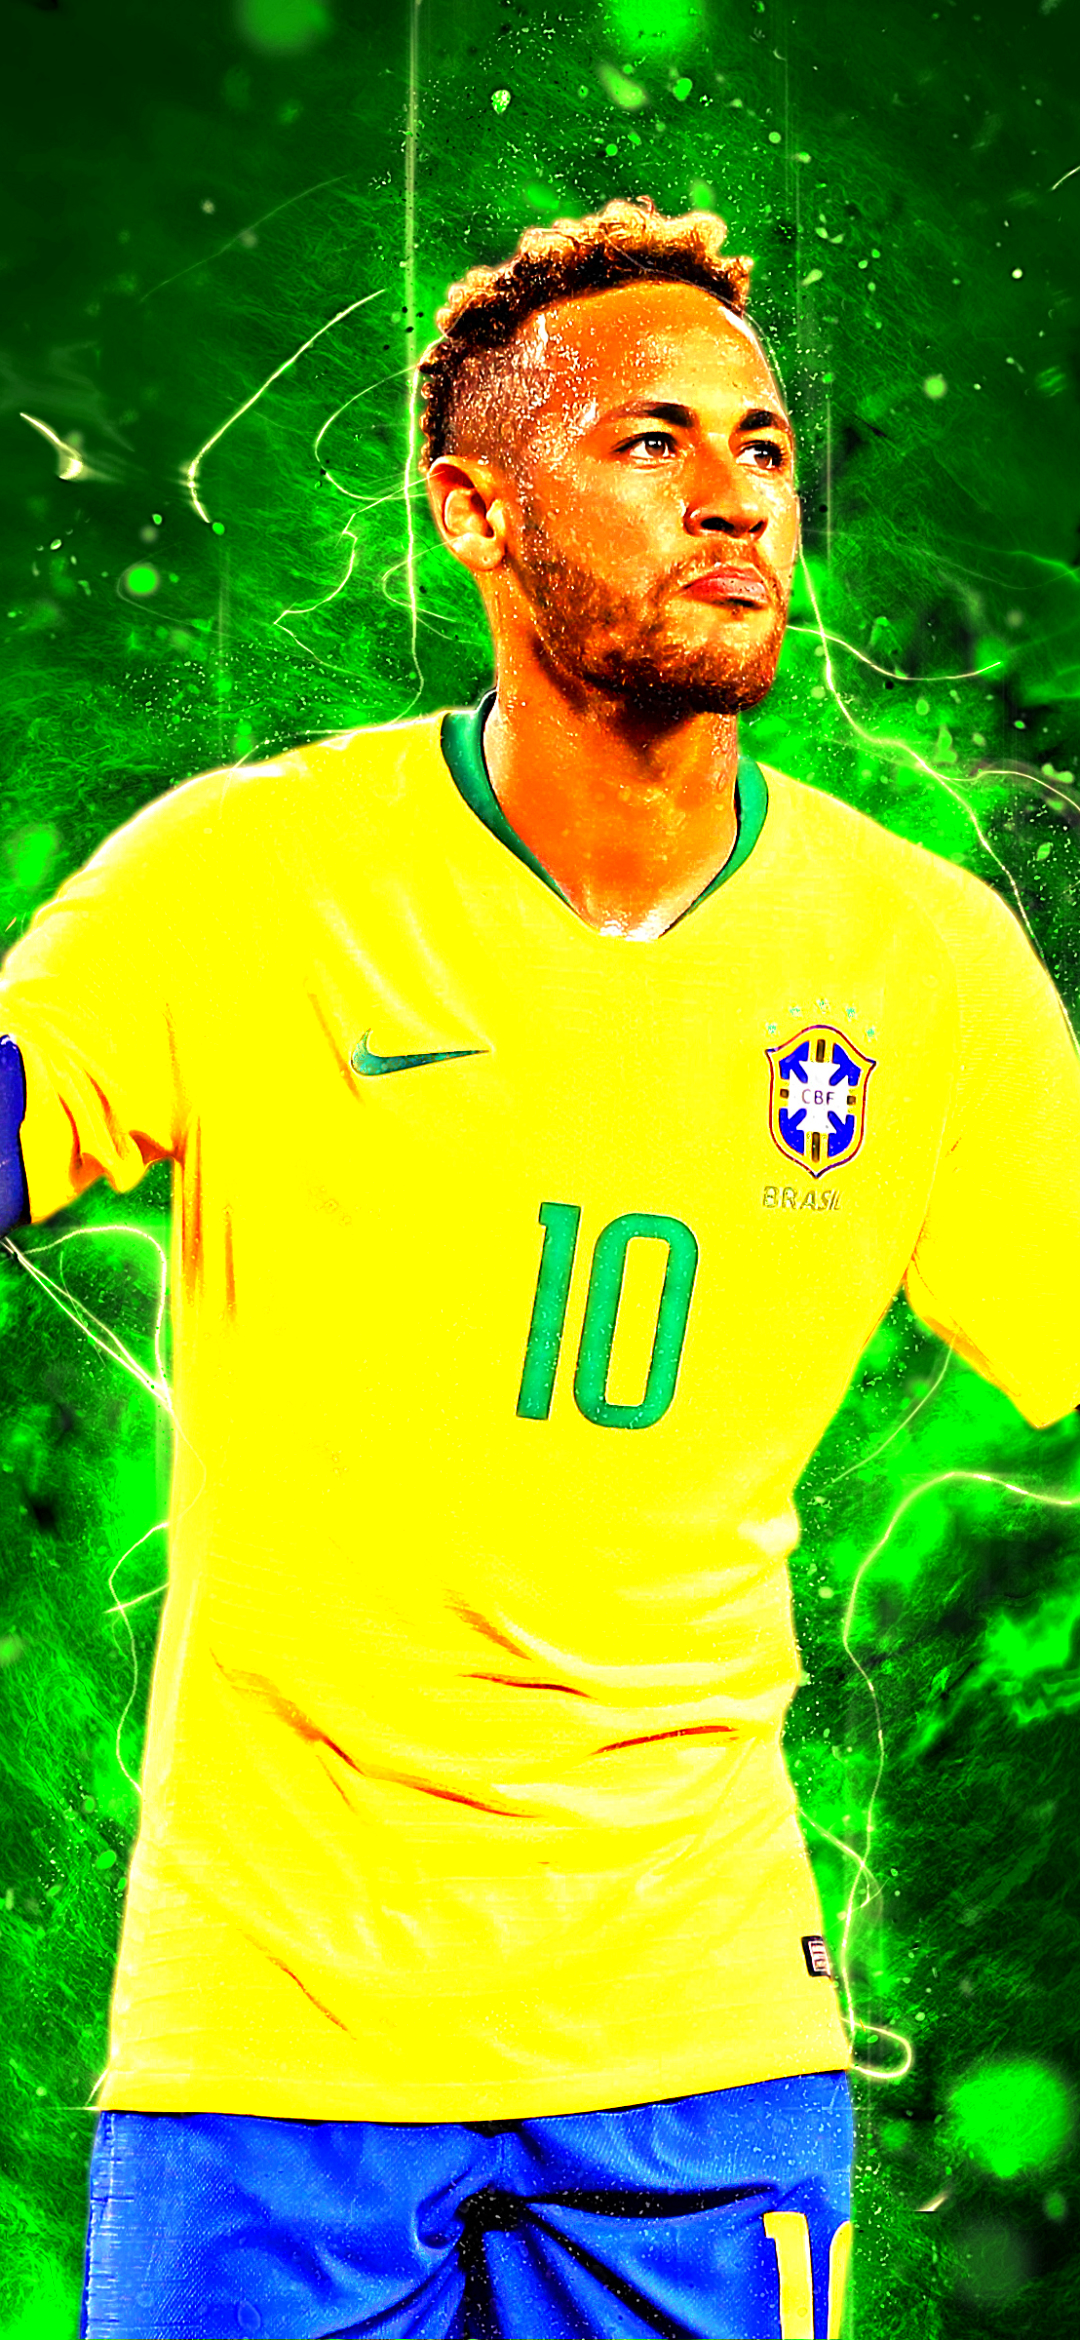 Neymar In Brazil Wallpapers - Wallpaper Cave